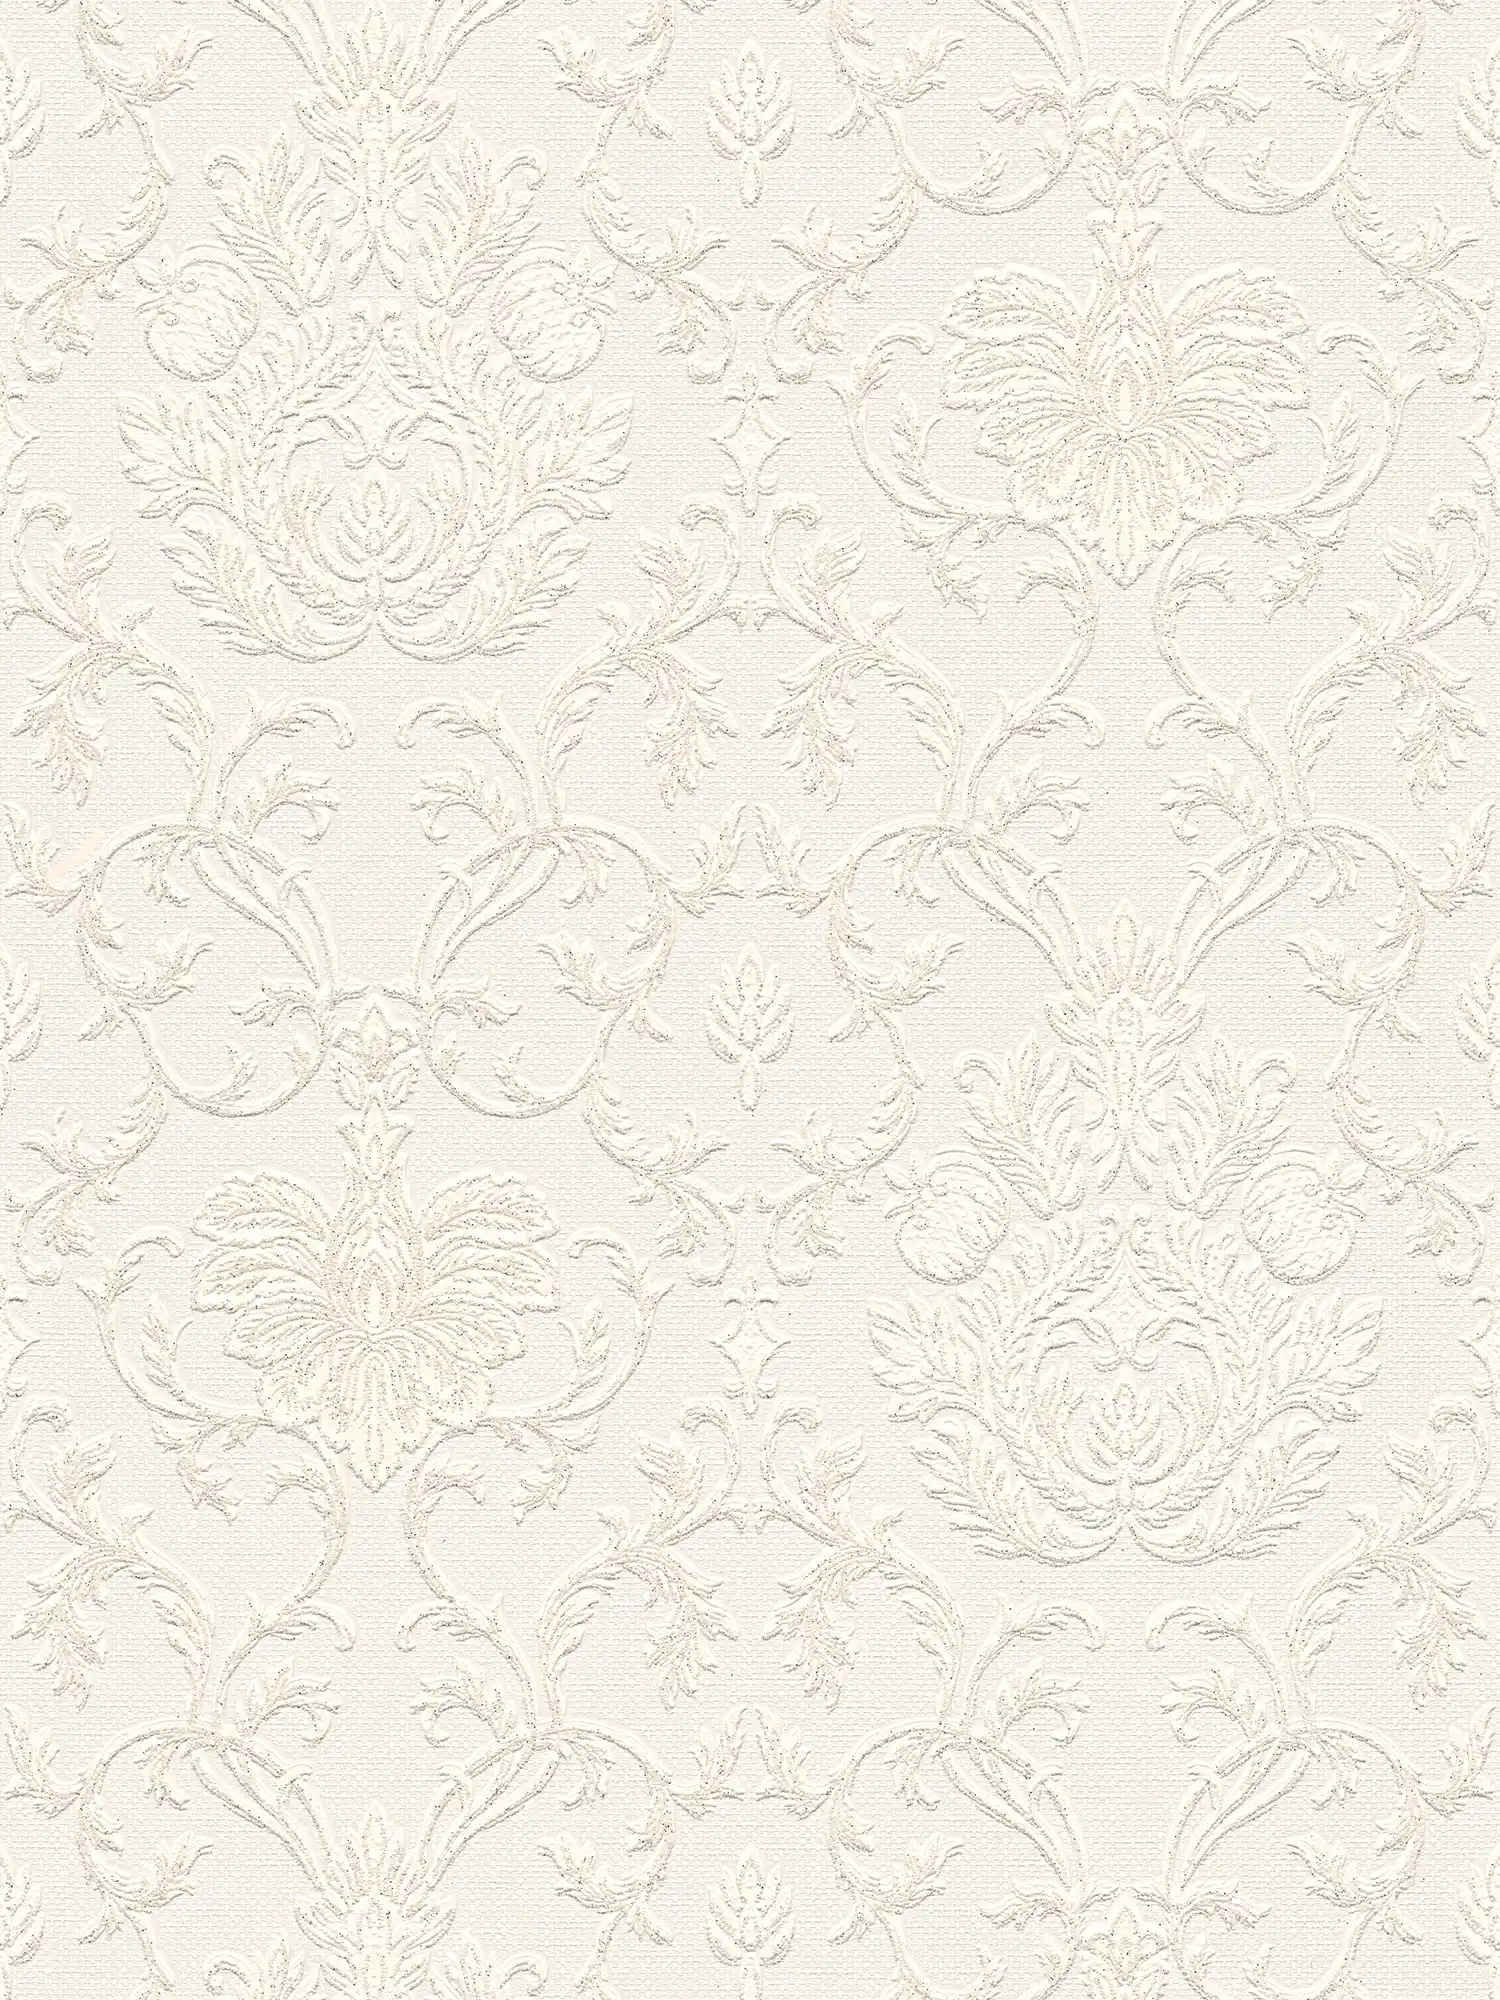         Glitzer Effekt Tapete mit 3D Ornament Design – Weiß
    